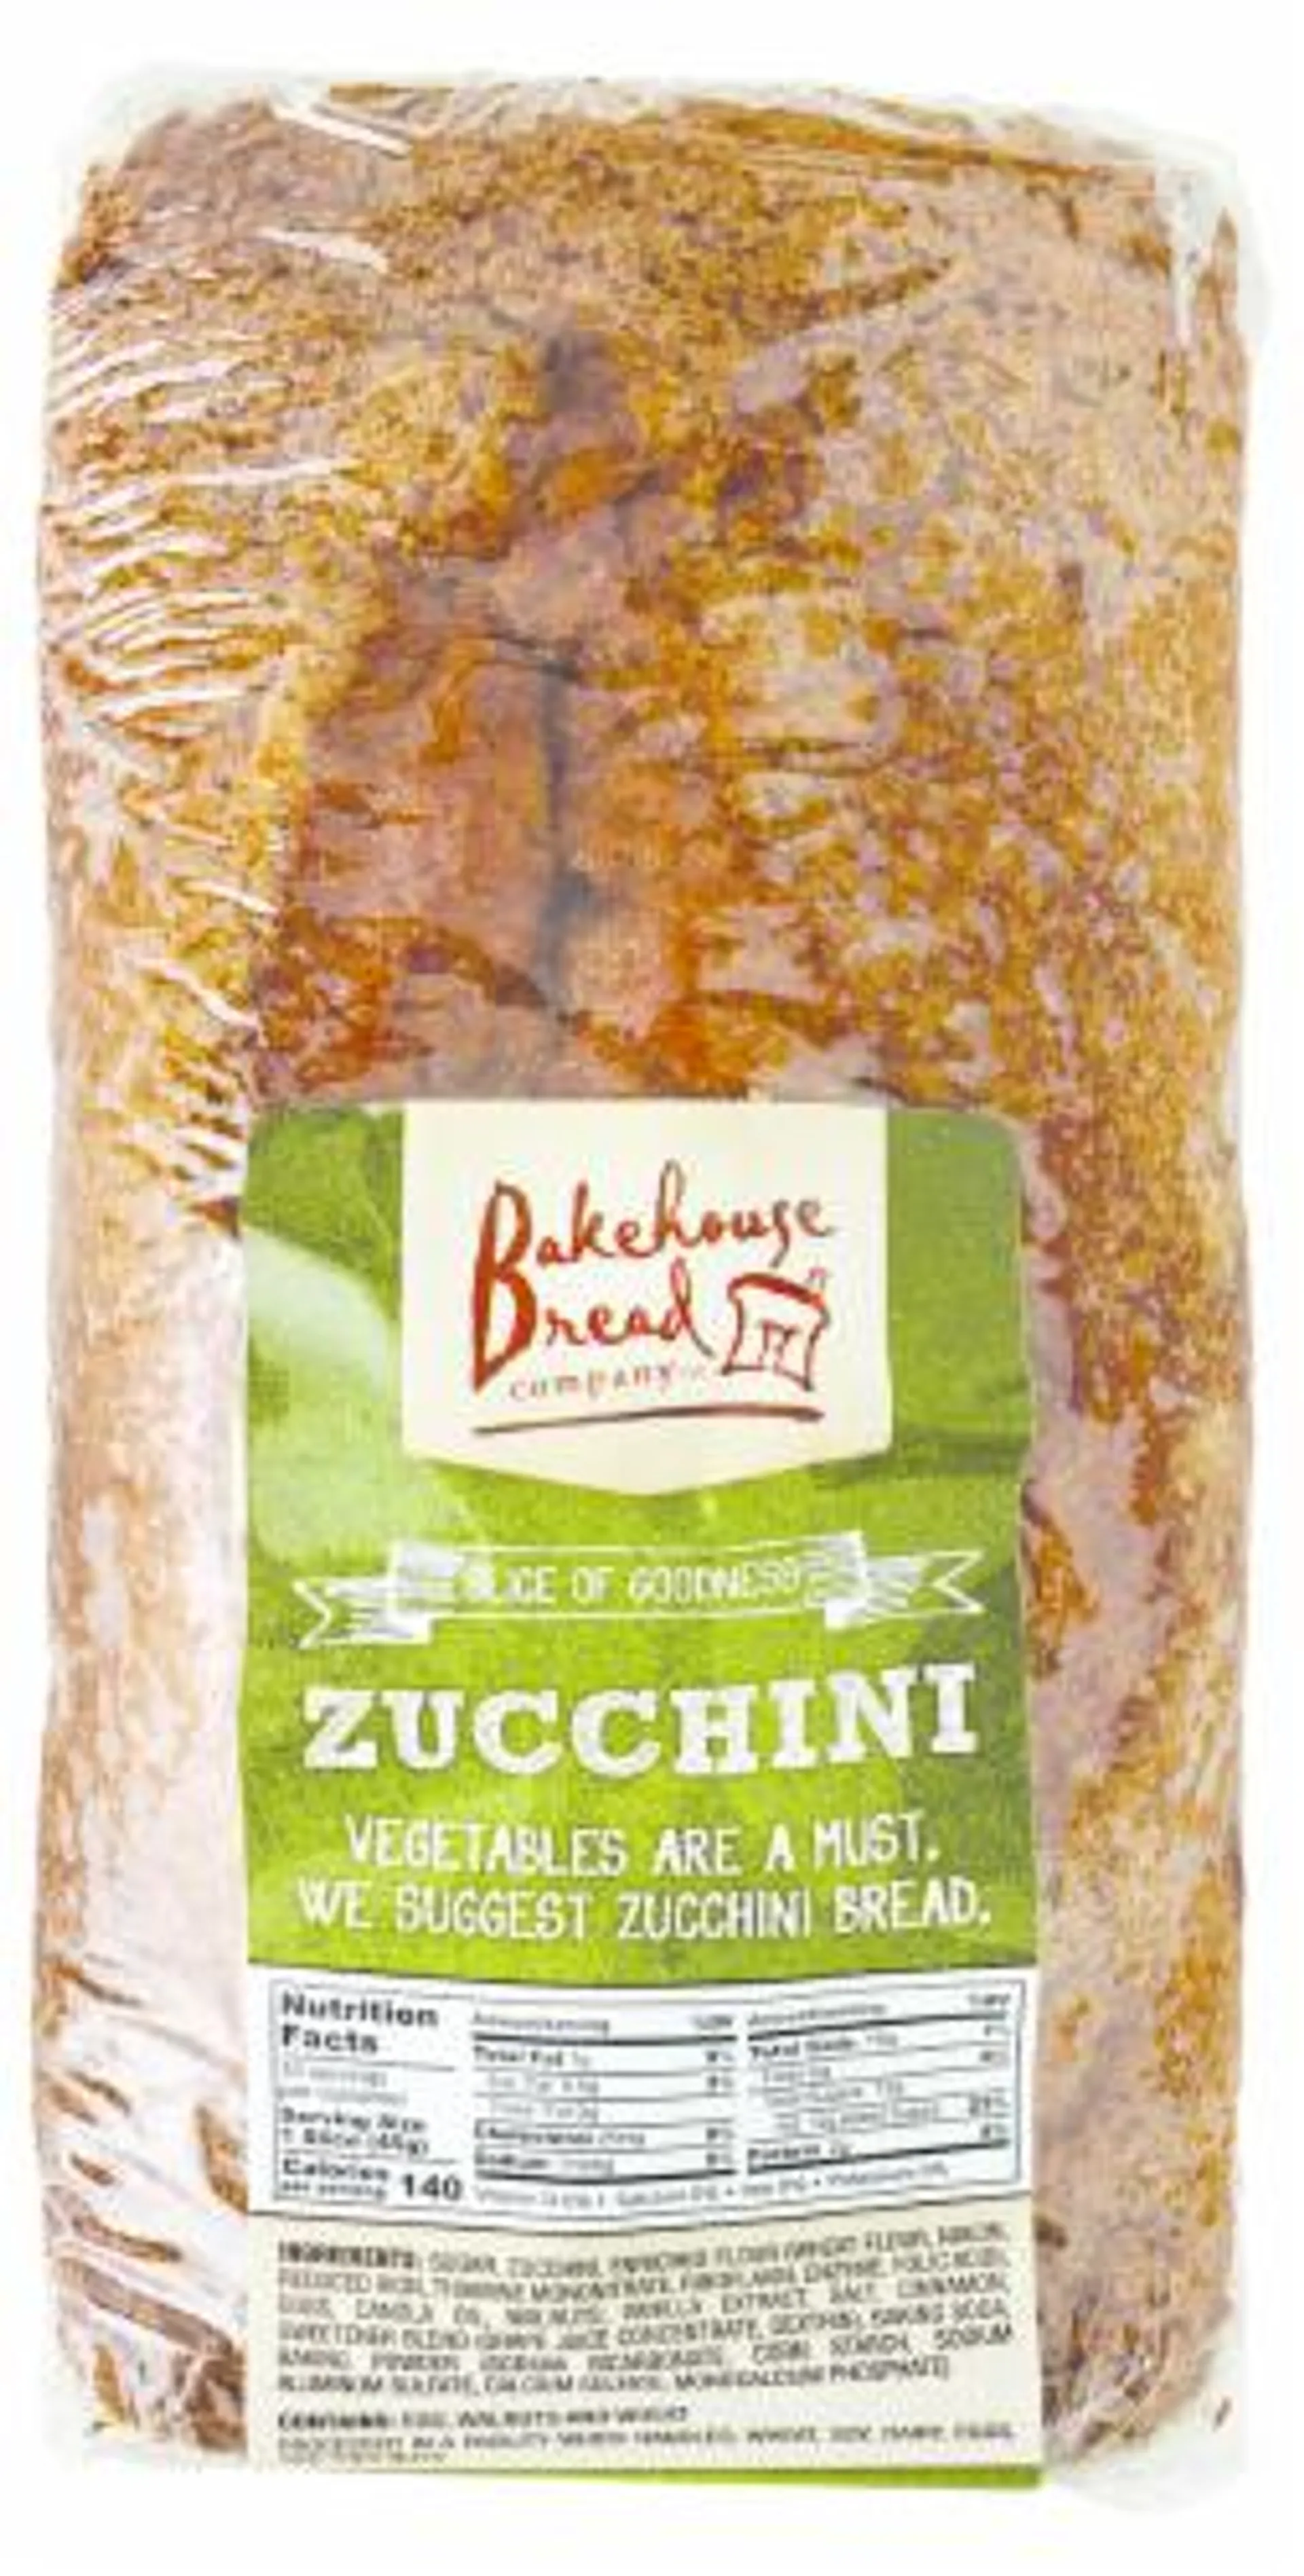 Bakehouse All Natural Zucchini Bread